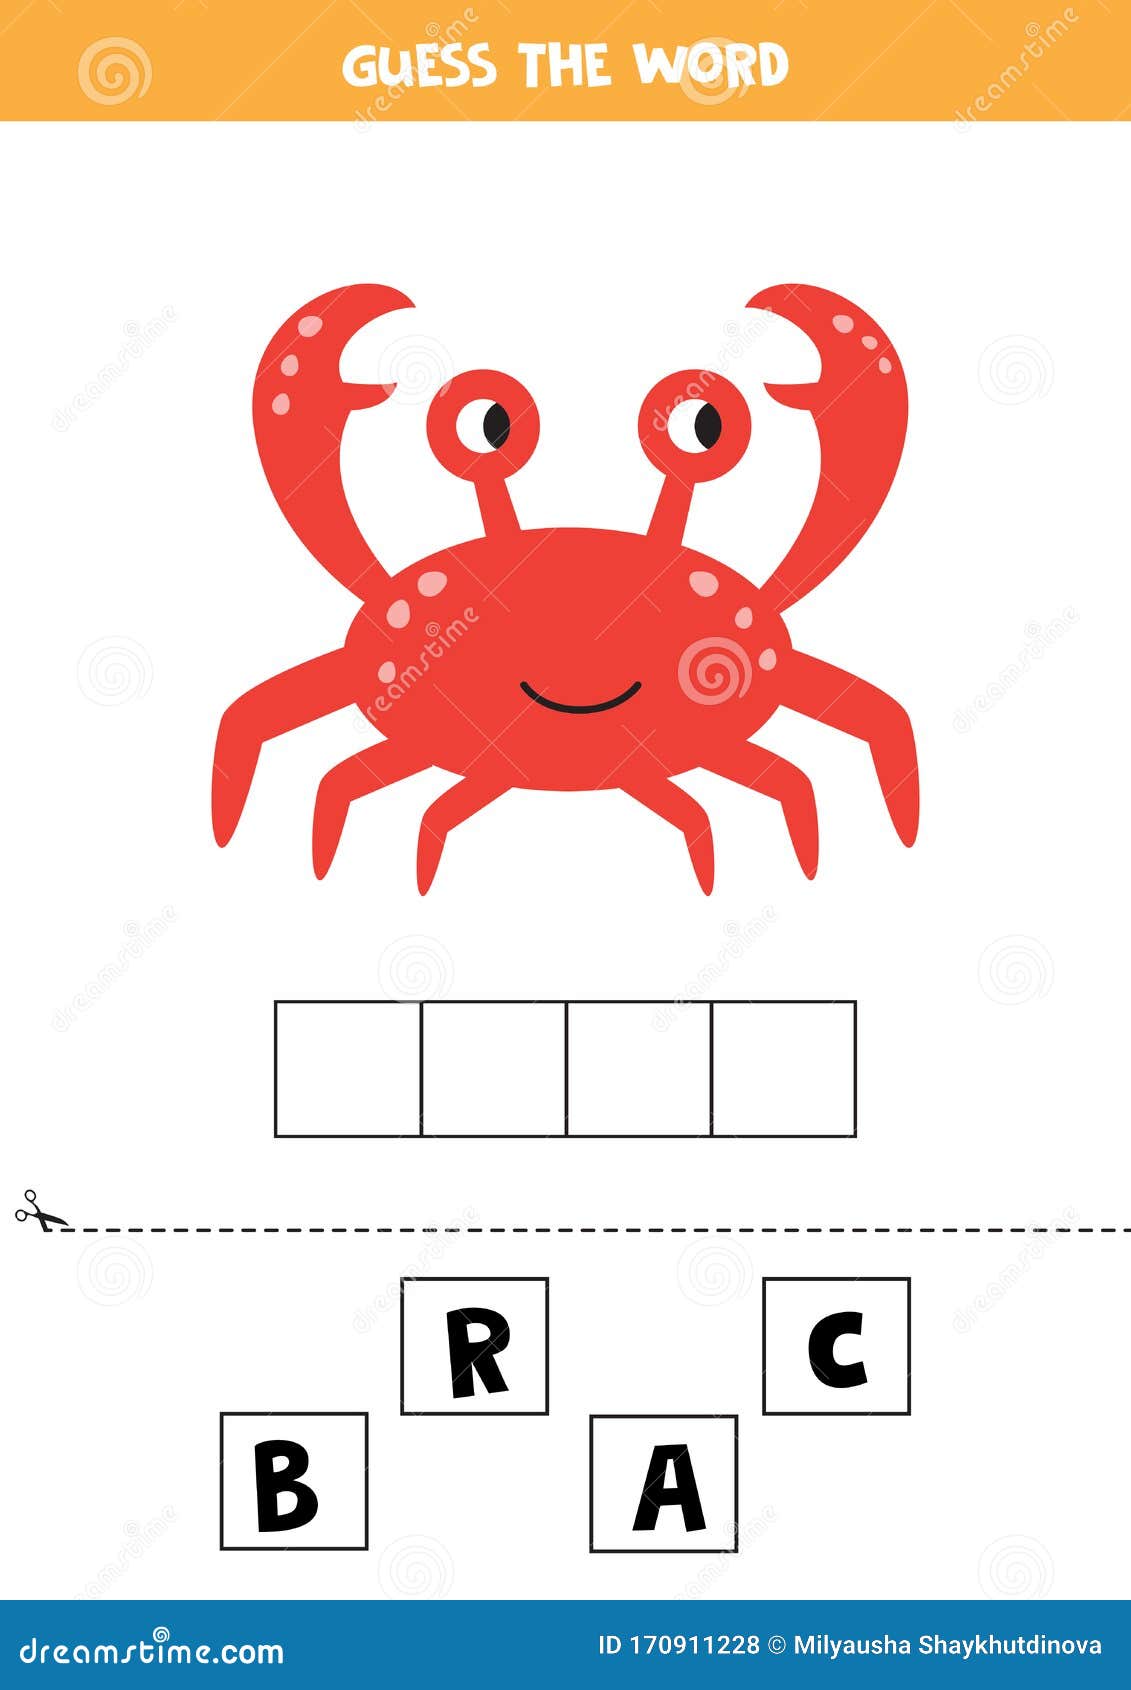 Crab game